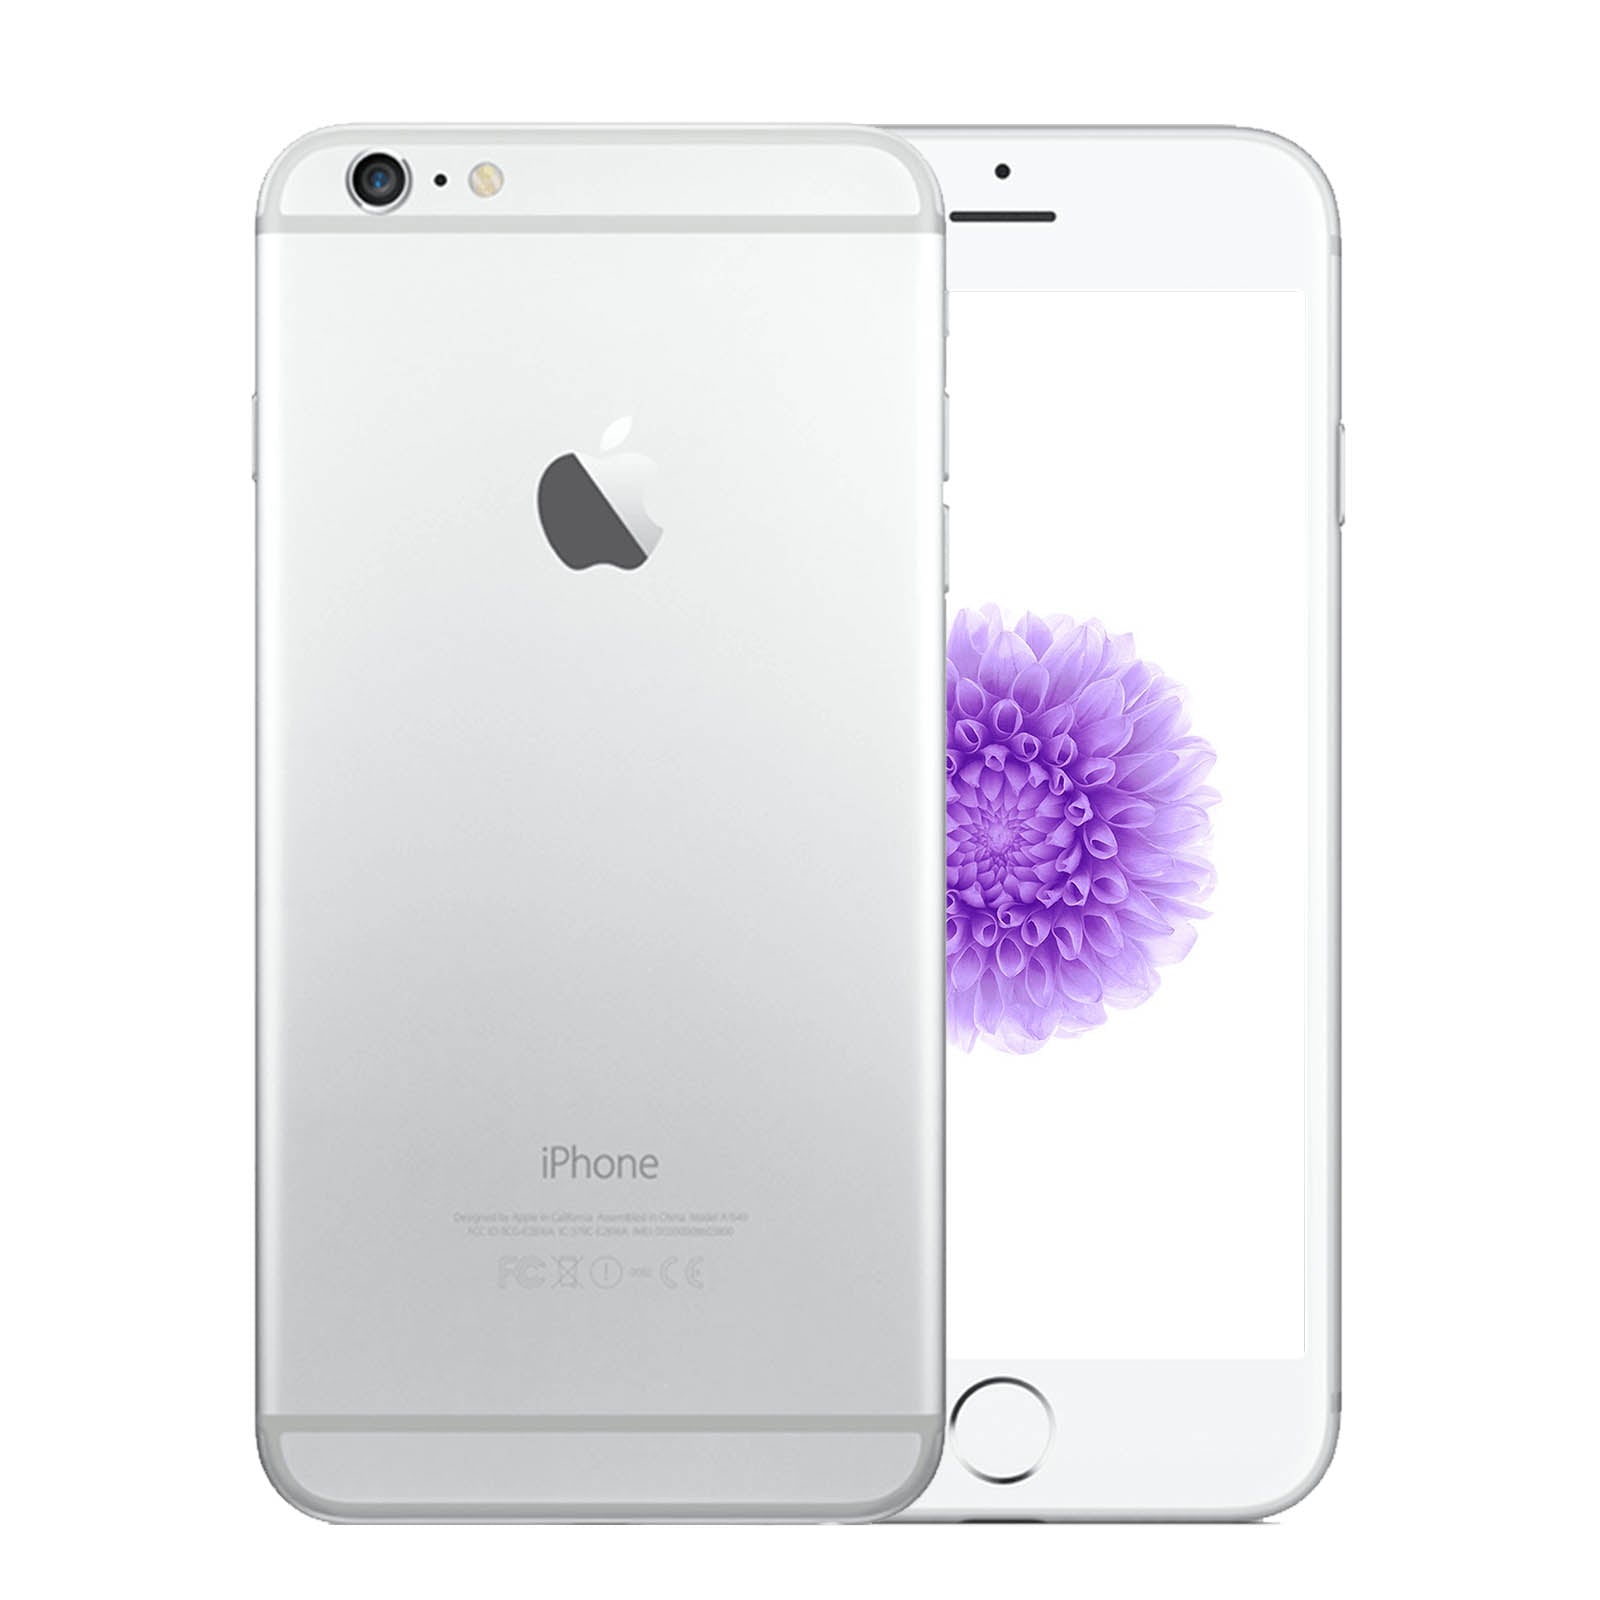 Apple iPhone 6 64GB Silver Fair - Unlocked